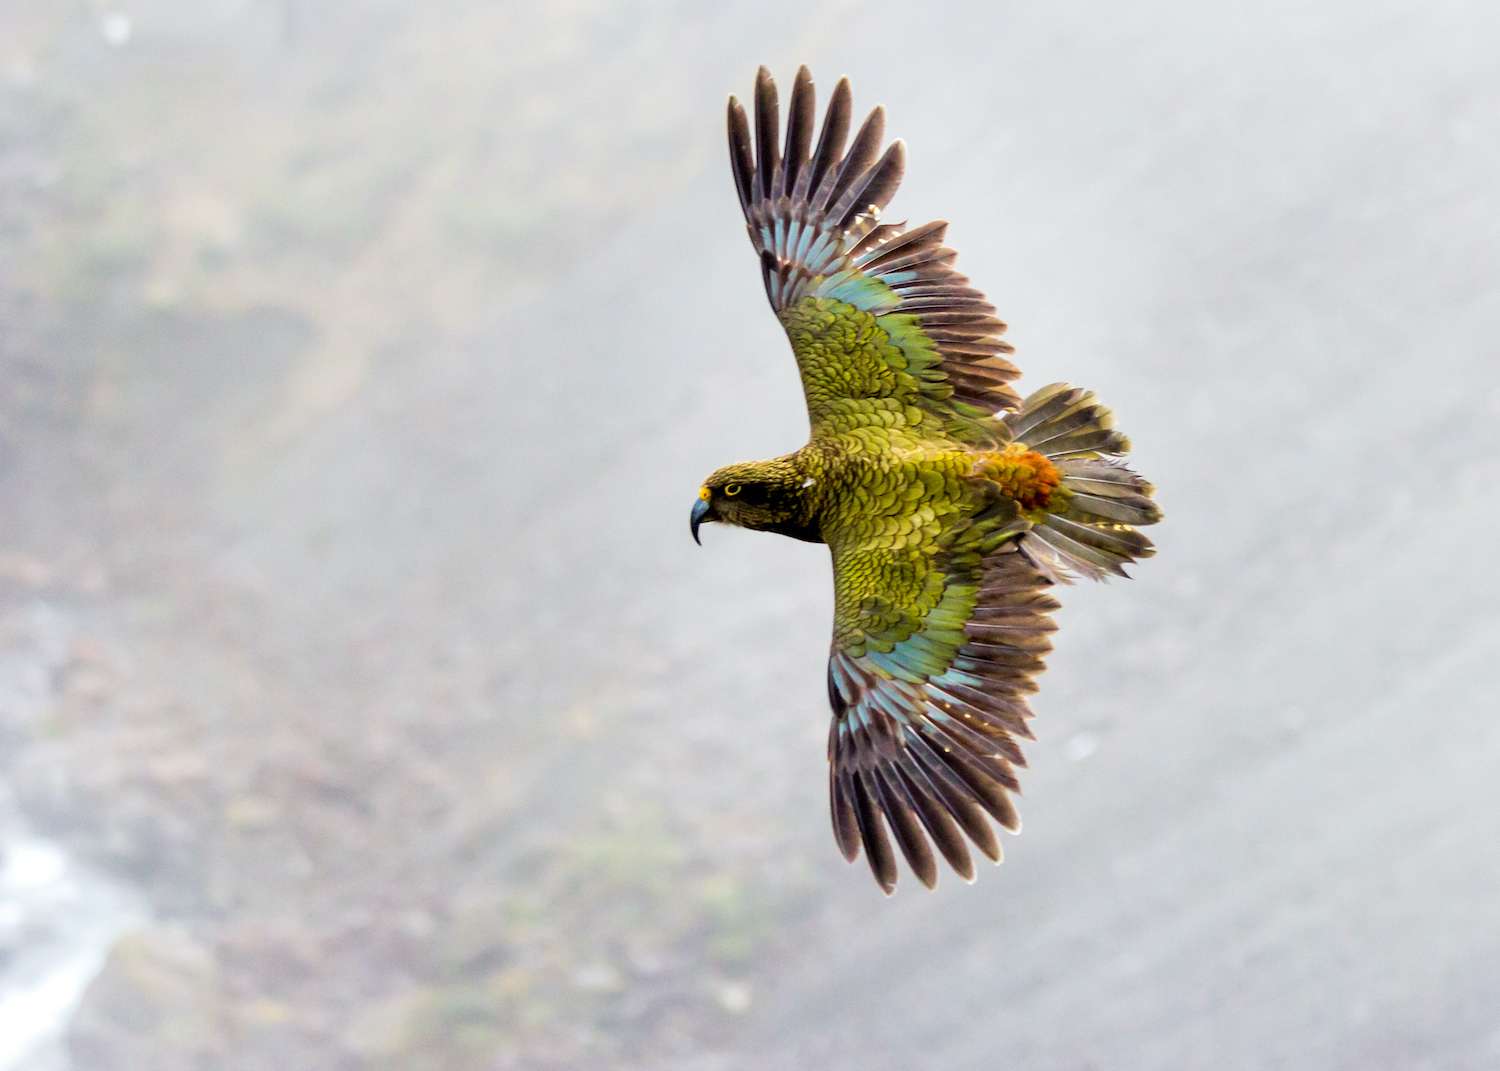 Kea, Parrot of the Alps in New Zealand.